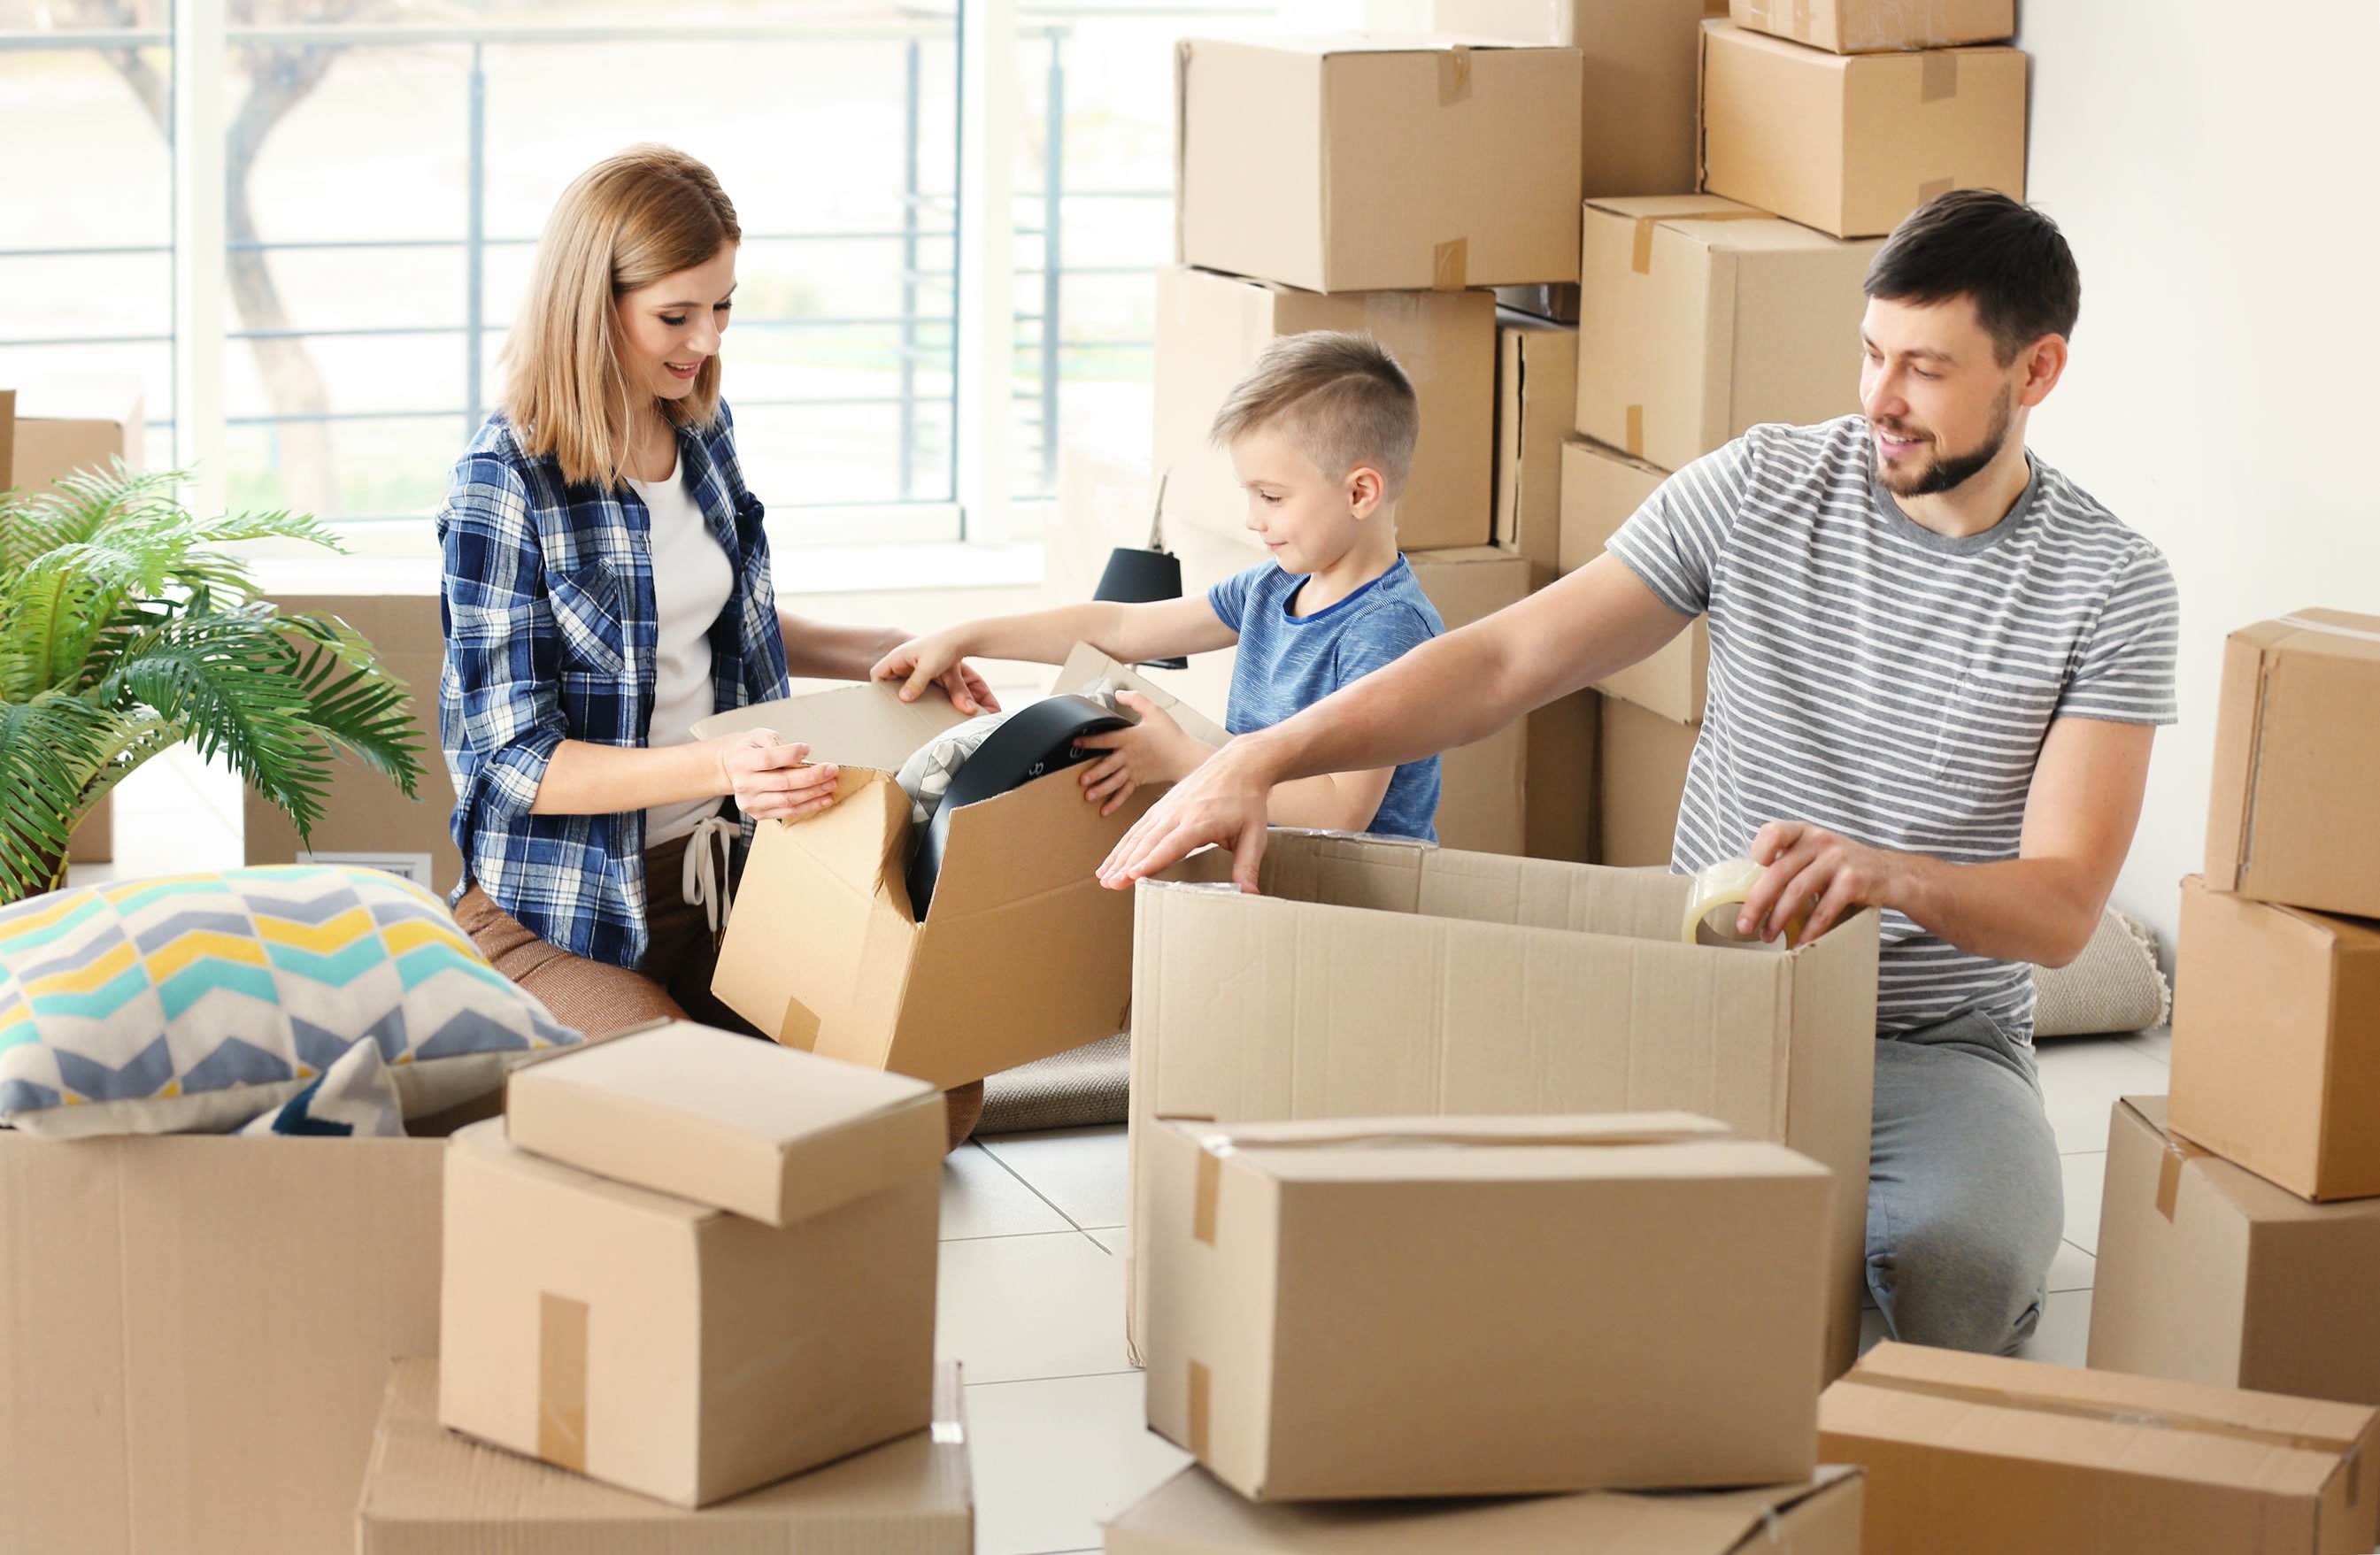 Make new moves. Переезд. Семья в квартире с коробками. Переезжают в квартиру. Коробки с вещами.